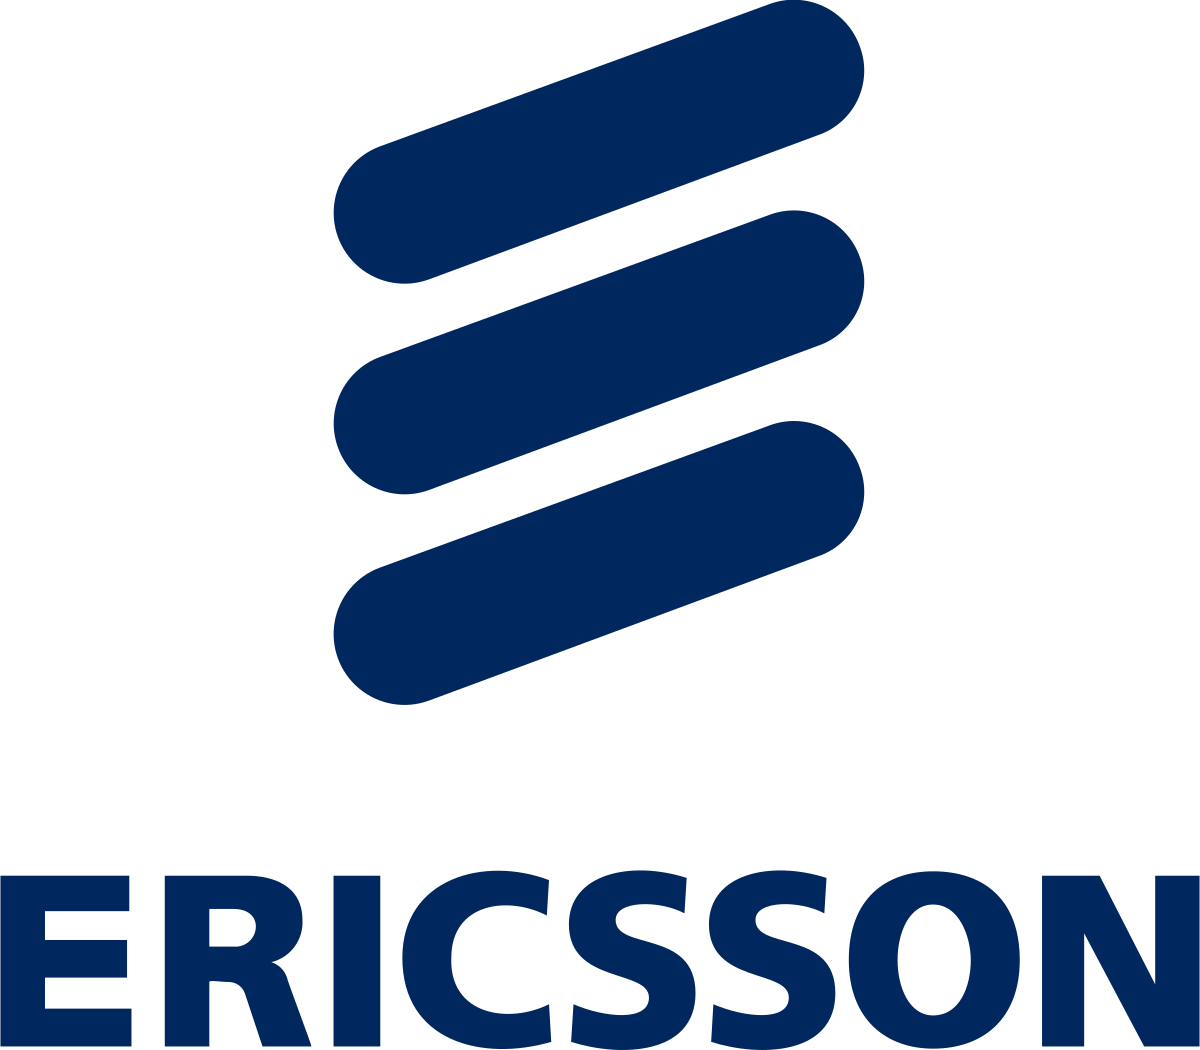 1200px-Ericsson_logo.svg.png